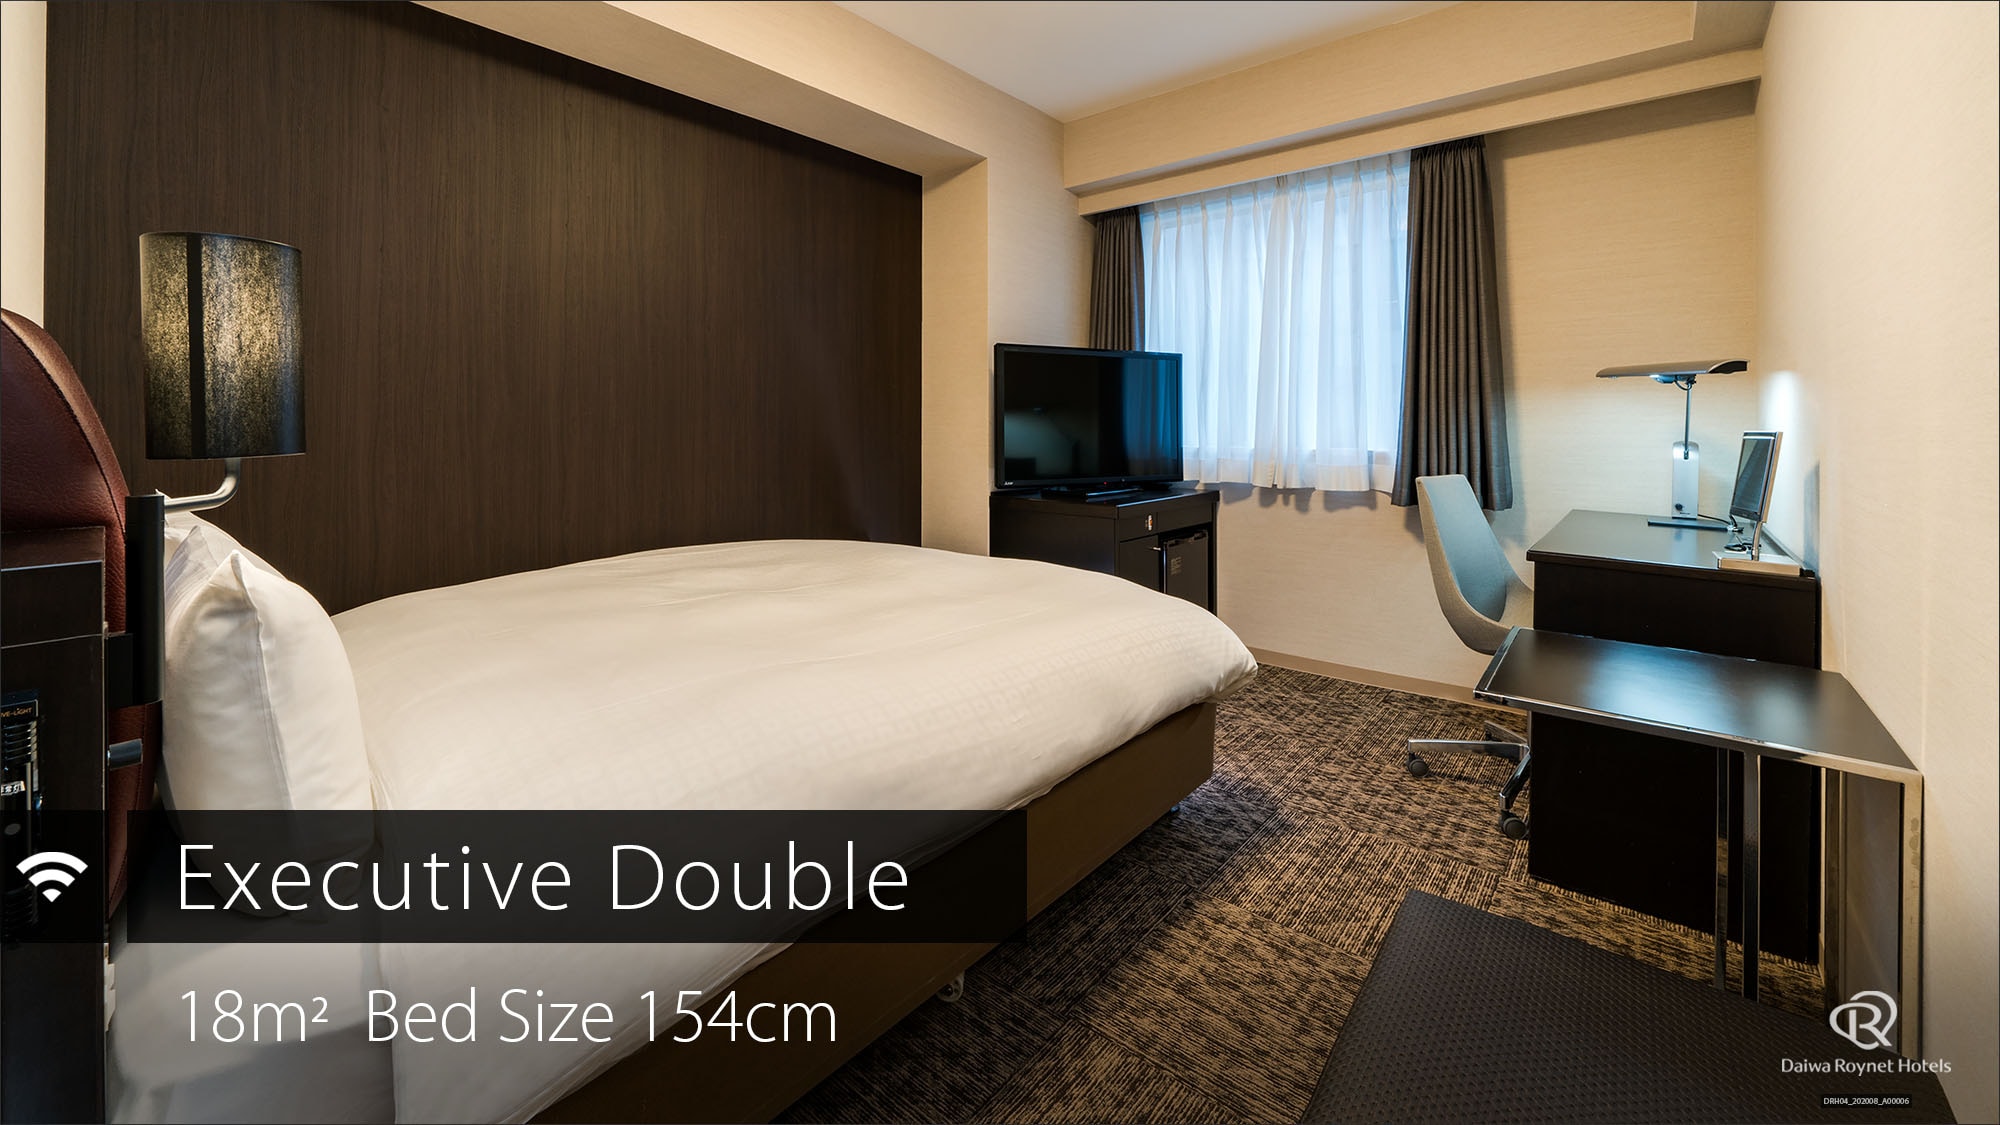 Executive Double Room